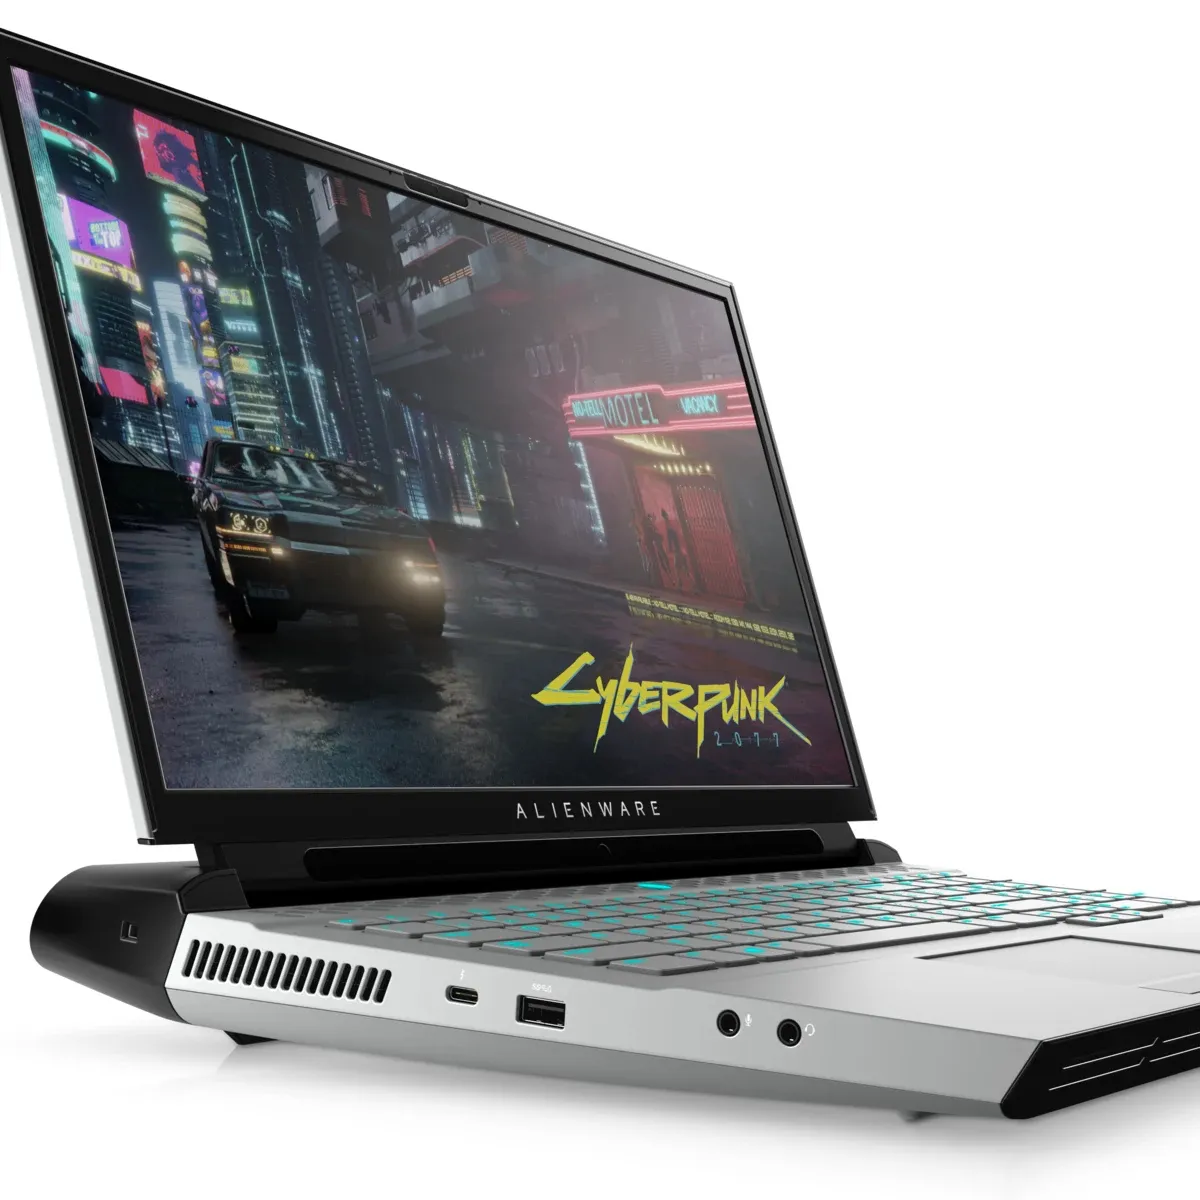 NEW Alienwares Area 51M I9 Laptop Gen 10 Intel i7 for sale in stock